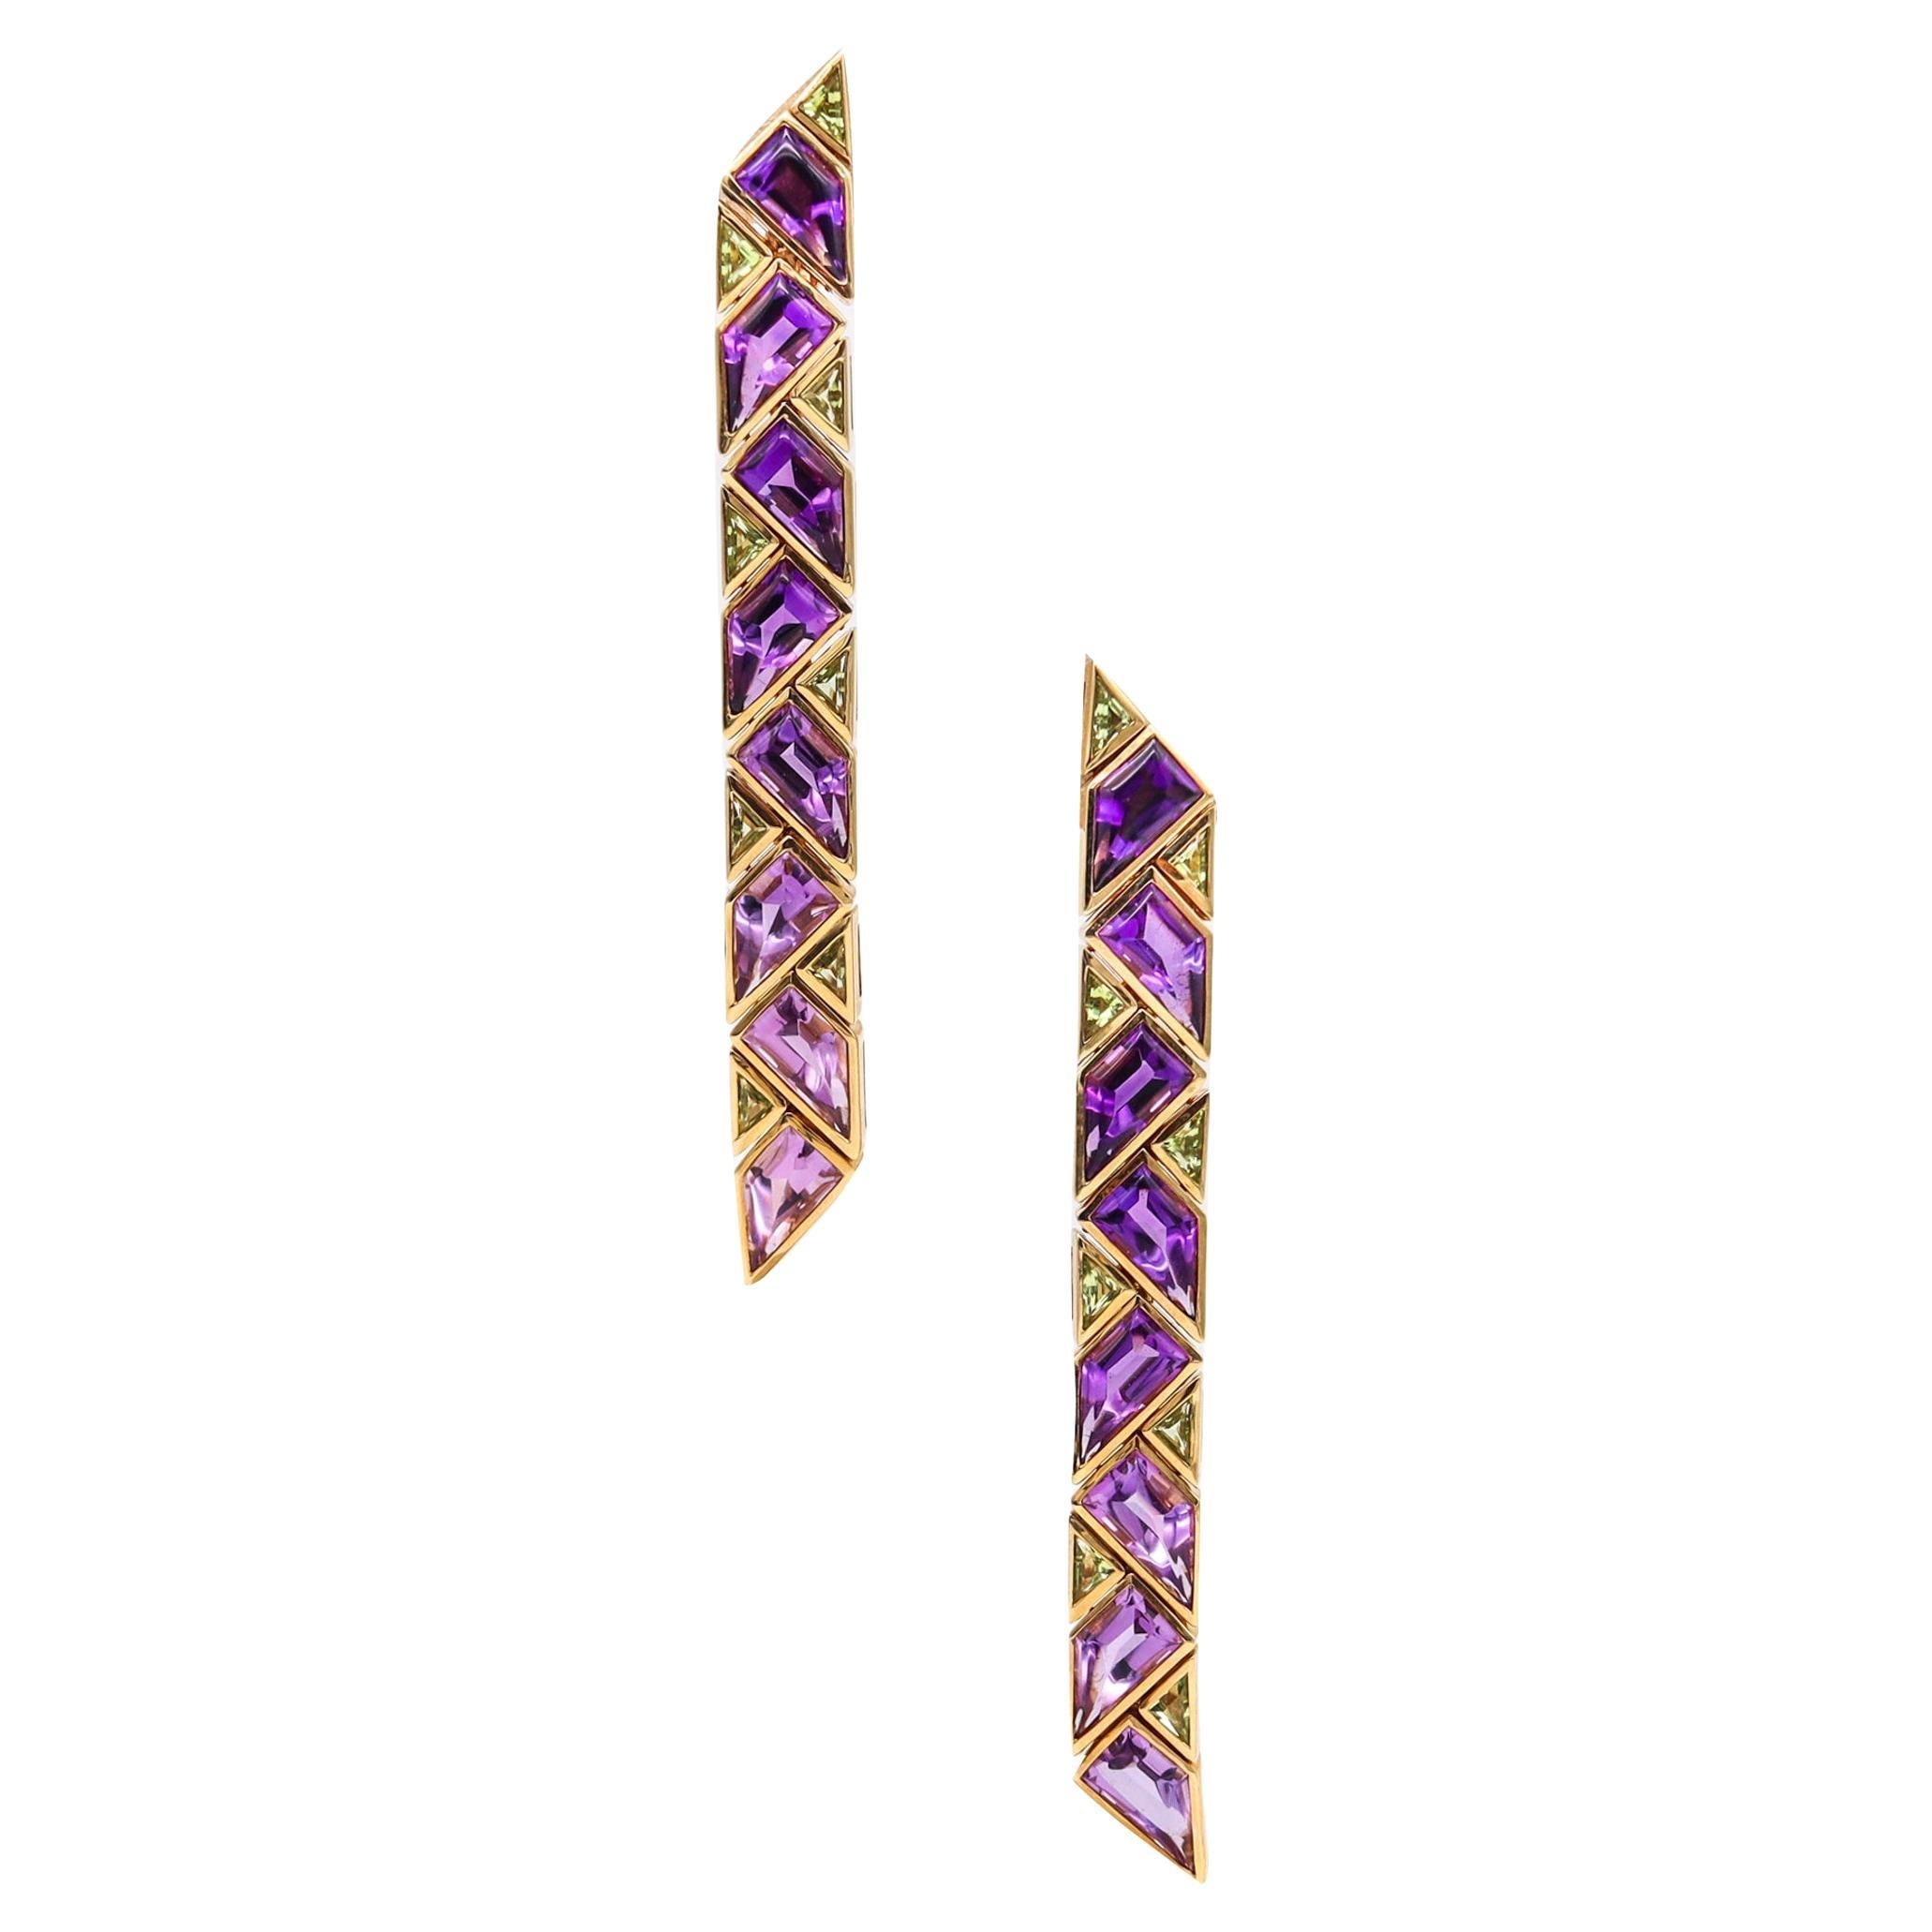 Marina Bvlgari 1989 Pyramide Dangle Earrings in 18k Gold with 47.5ctw Gemstone